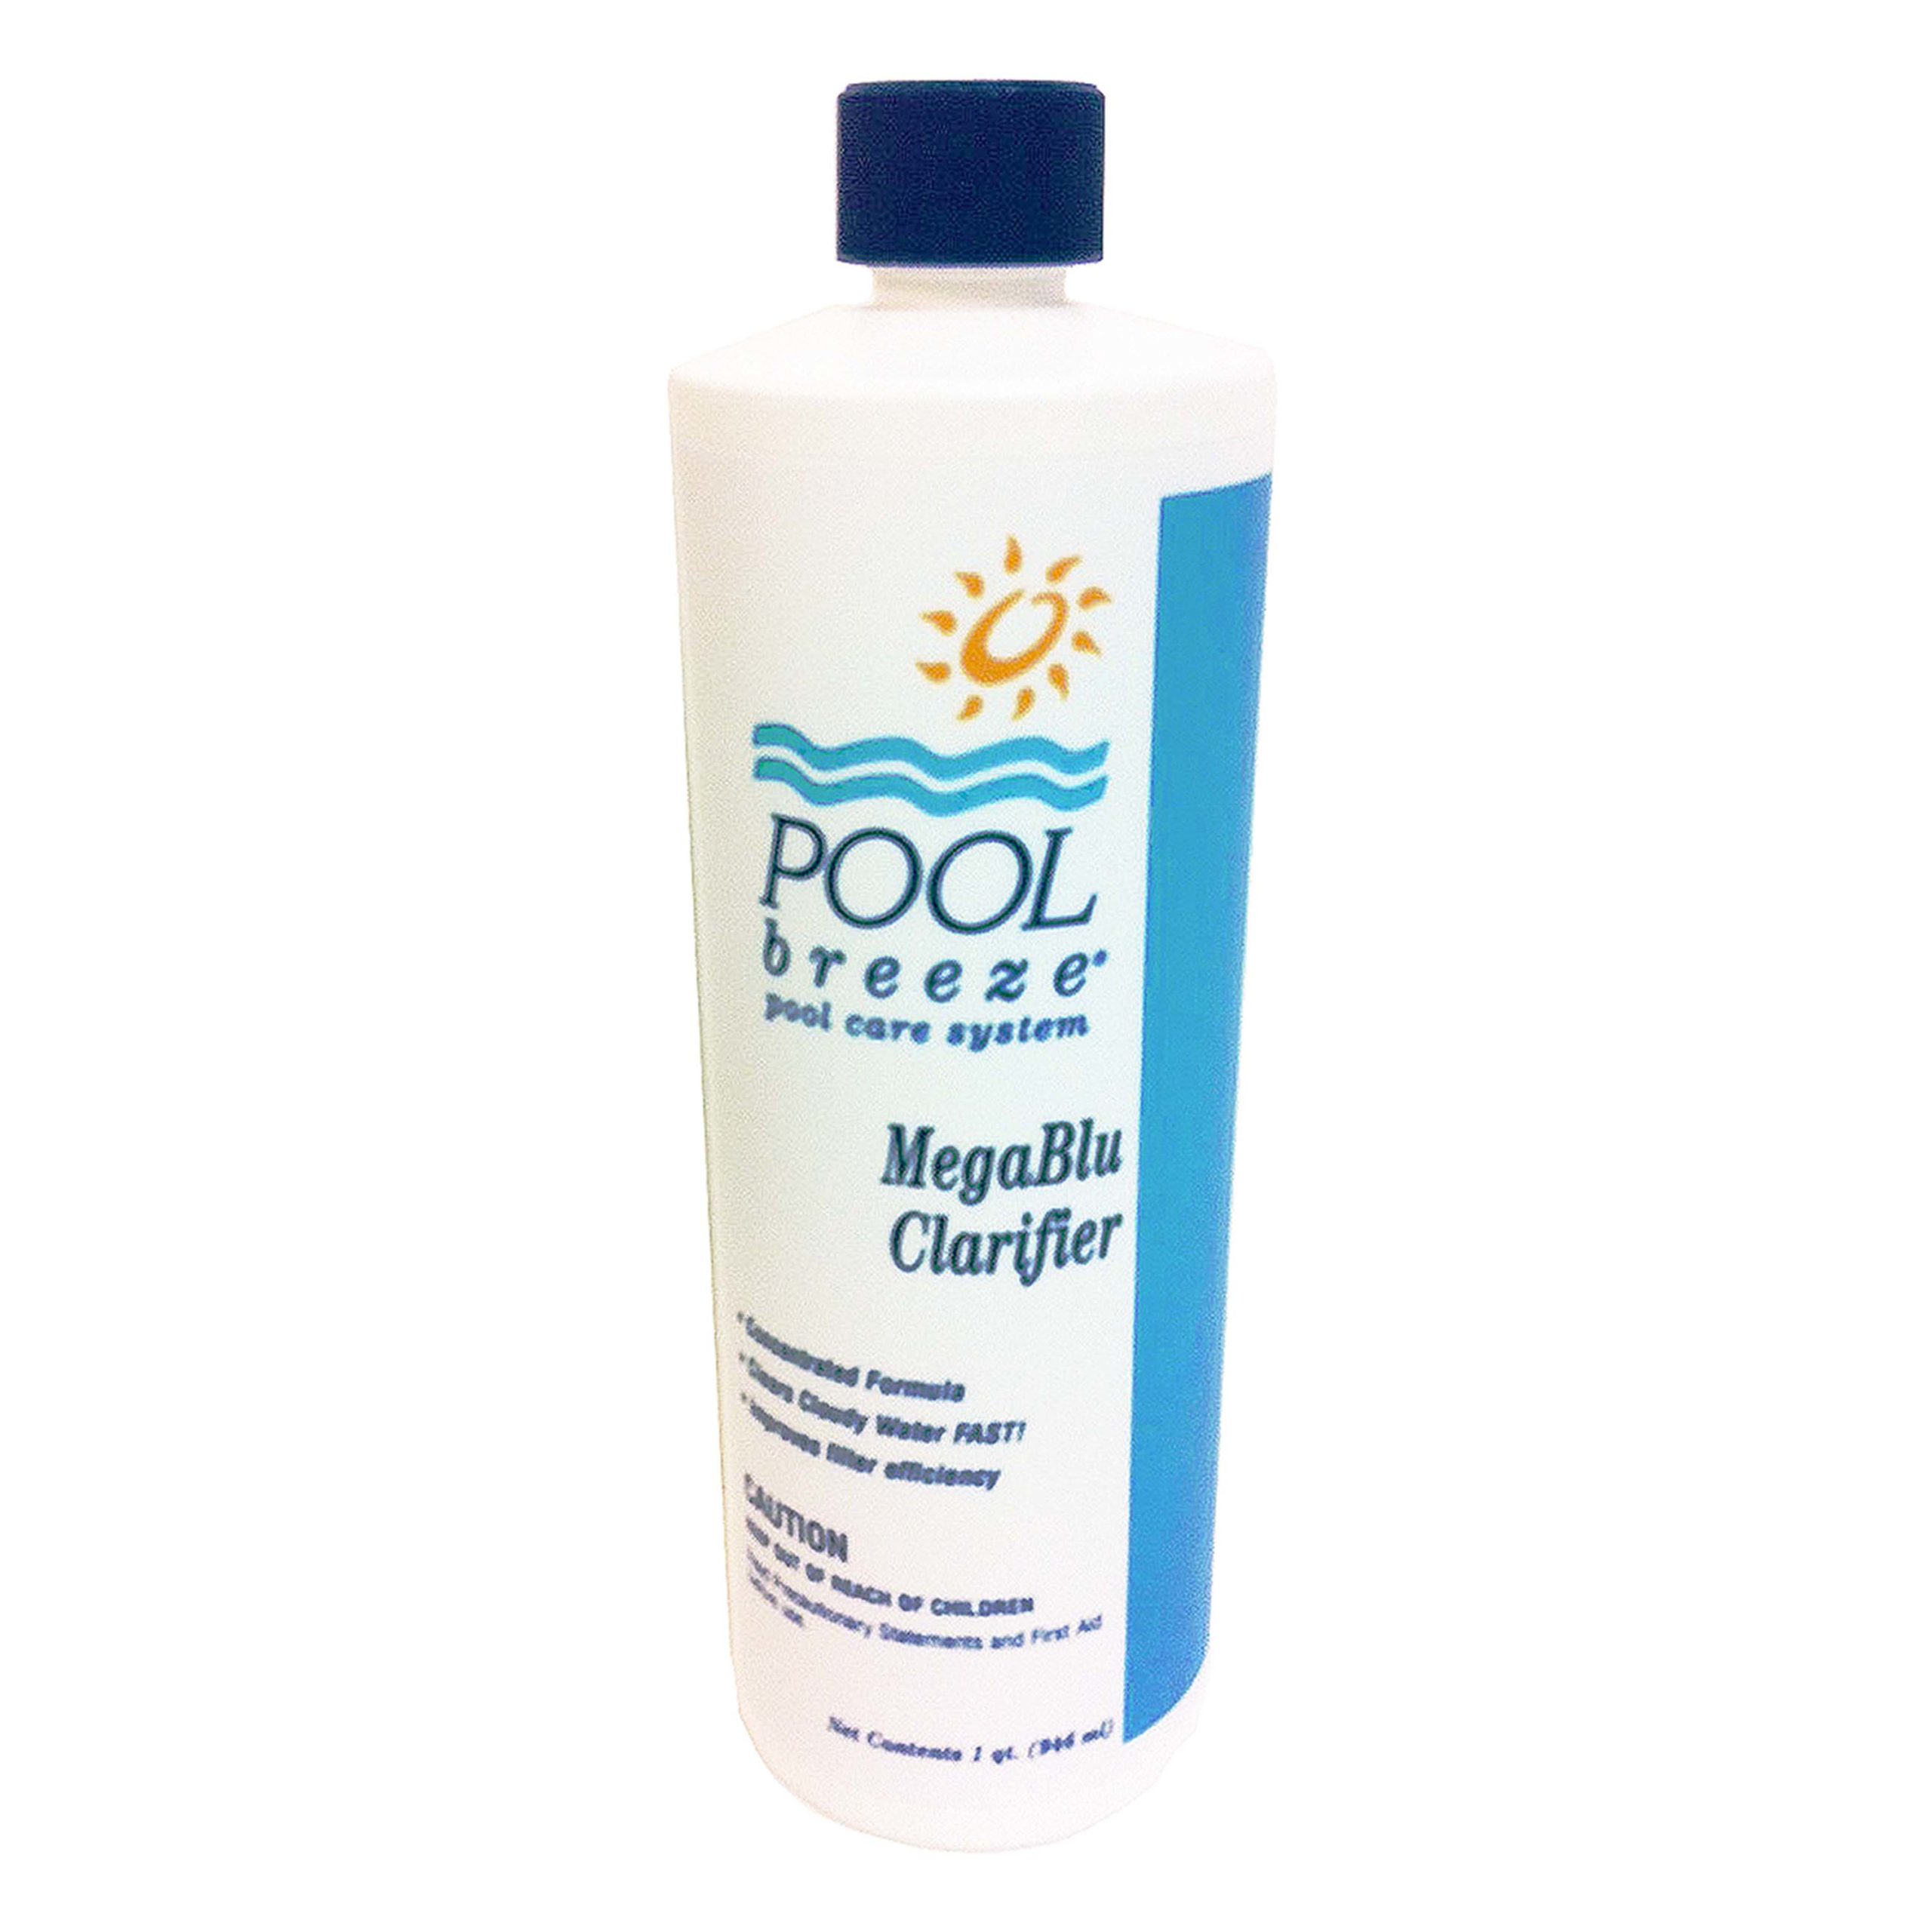 POOL Breeze MegaBlu Clarifier - clears cloudy pool water